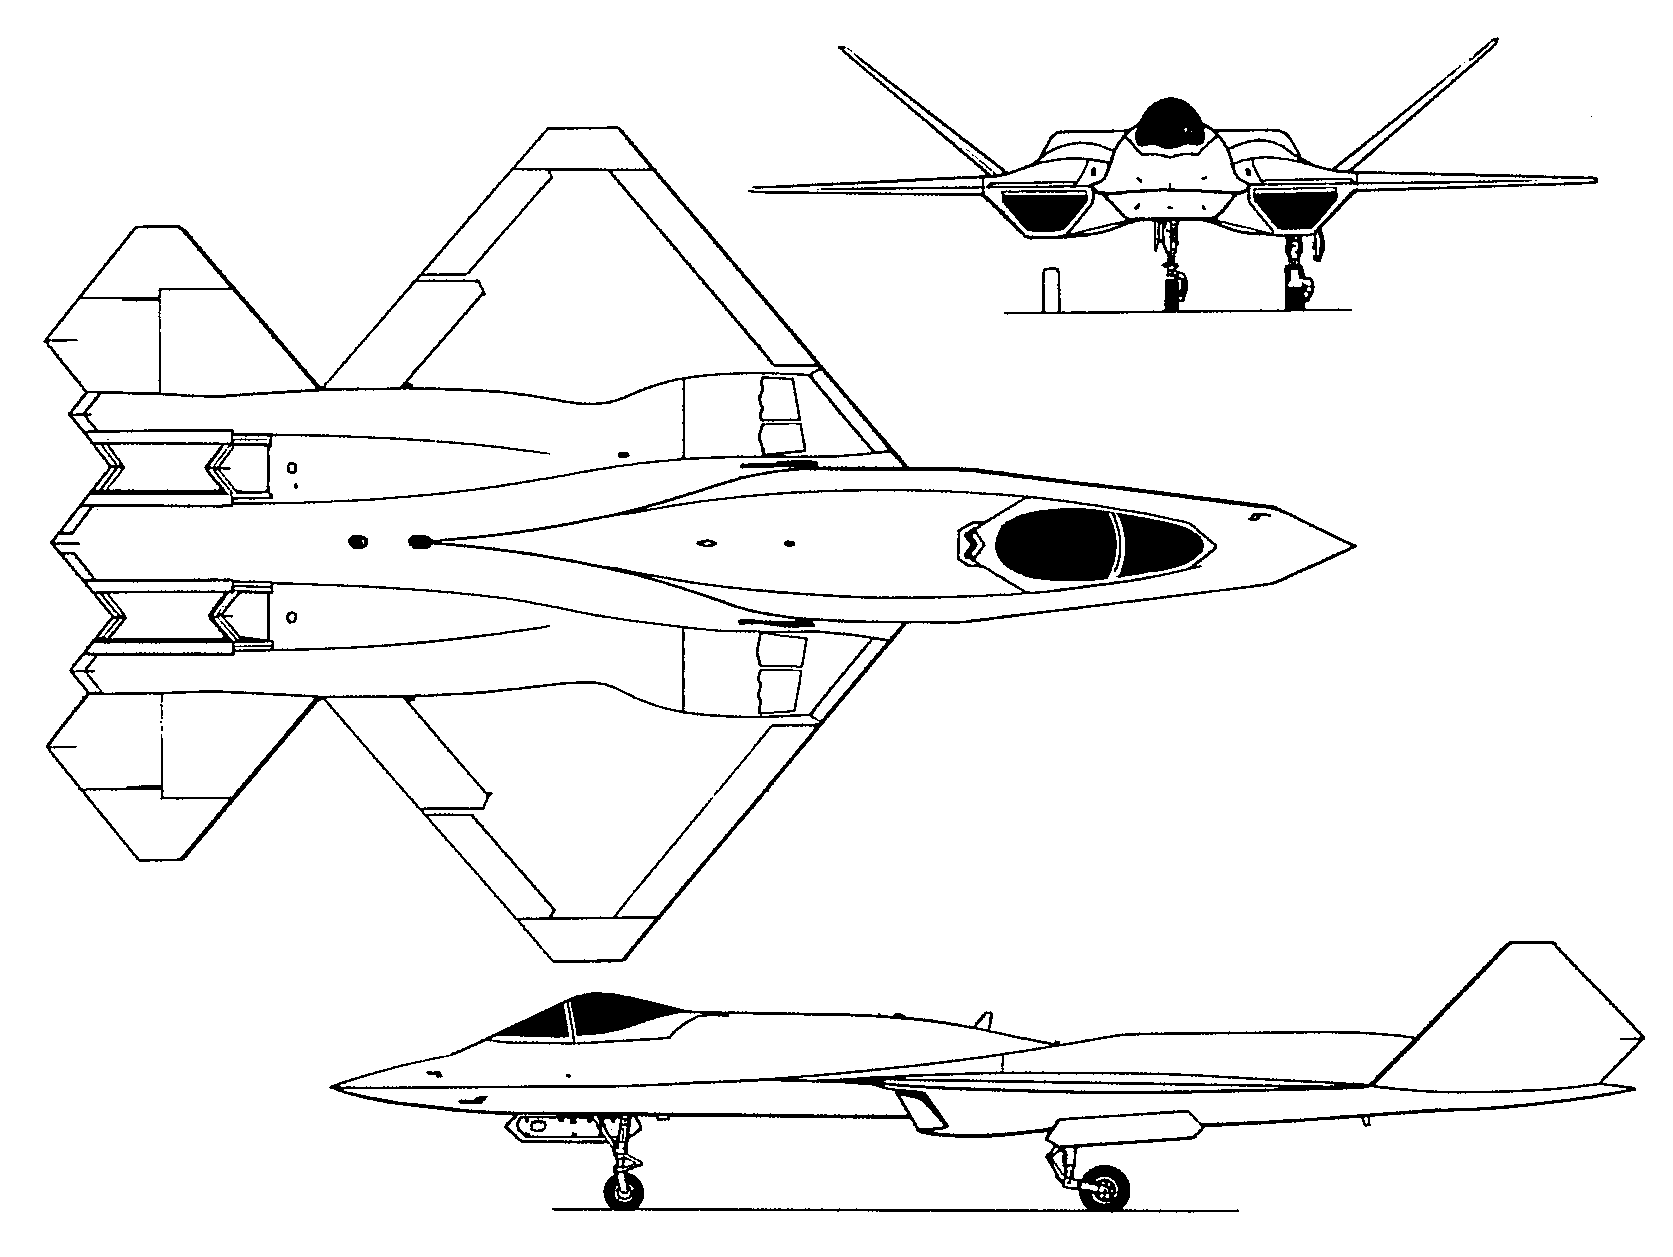 YF-23的主翼面采用了前缘后掠角与后缘前掠角都为40度的前后对称菱形设计，配合外倾角50度的V型尾翼。单就控制面数量而言，YF-23的气动控制设计要简洁得多。